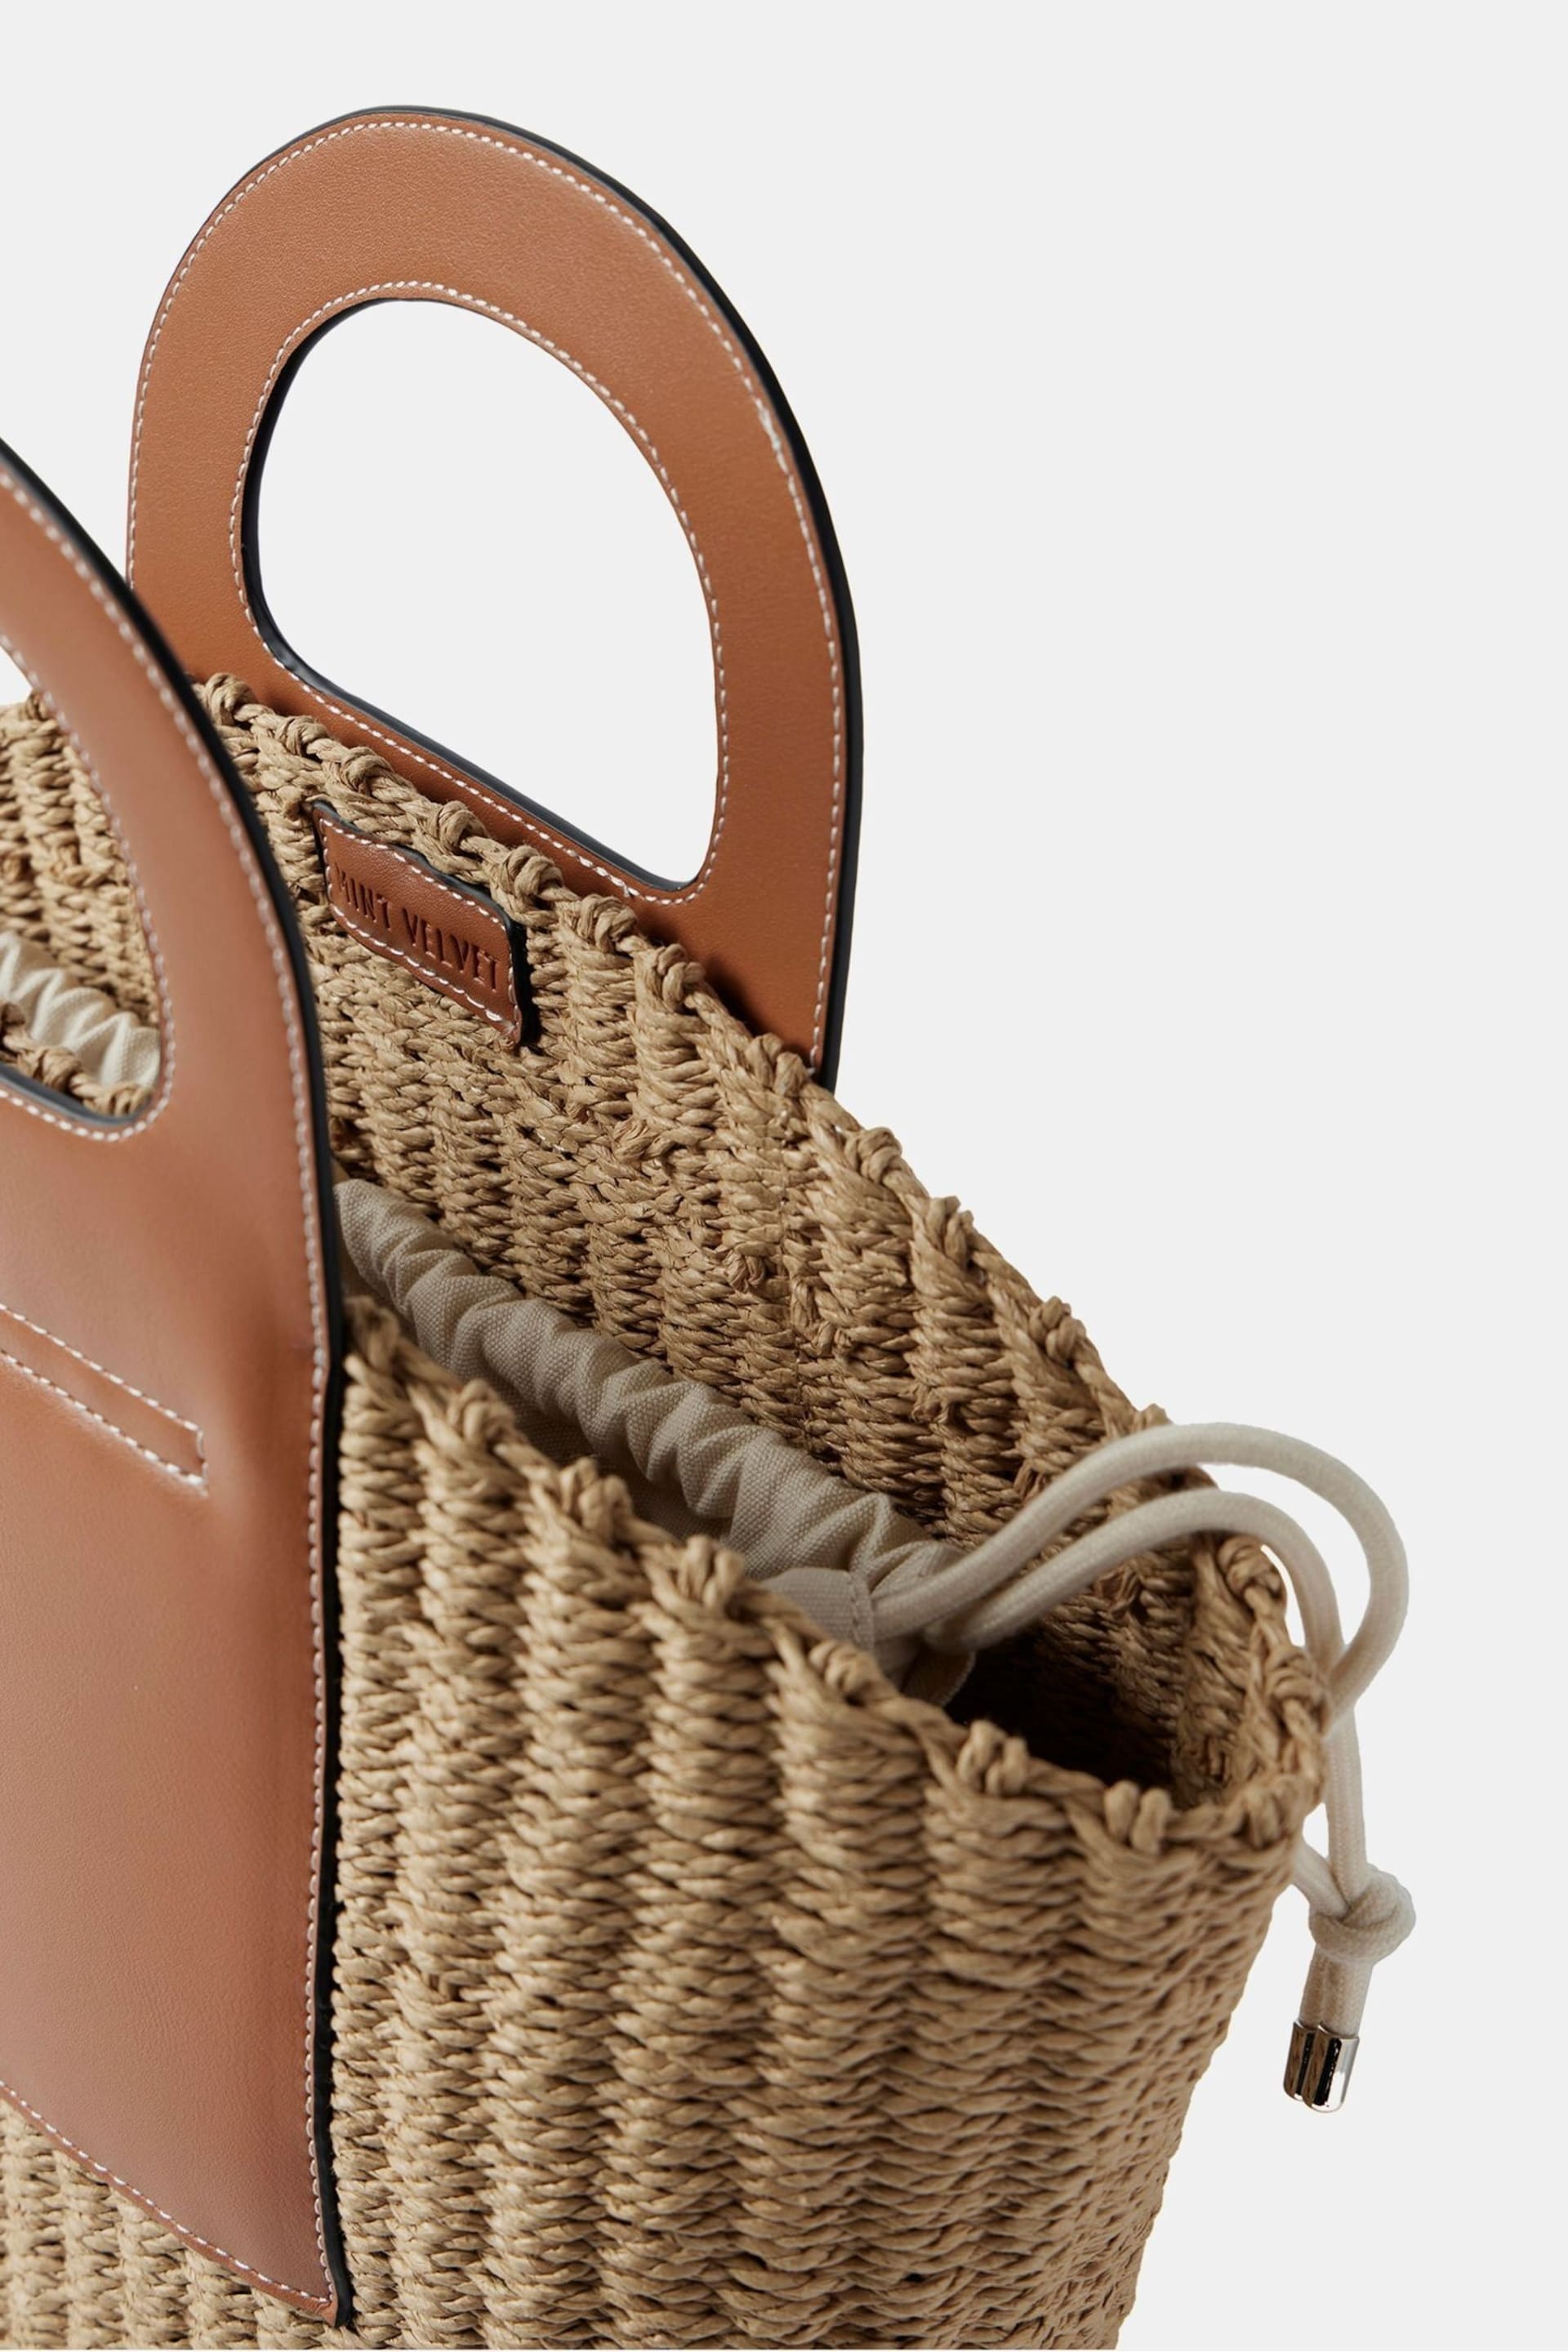 Mint Velvet Brown Leather Woven Basket Bag - Image 5 of 5